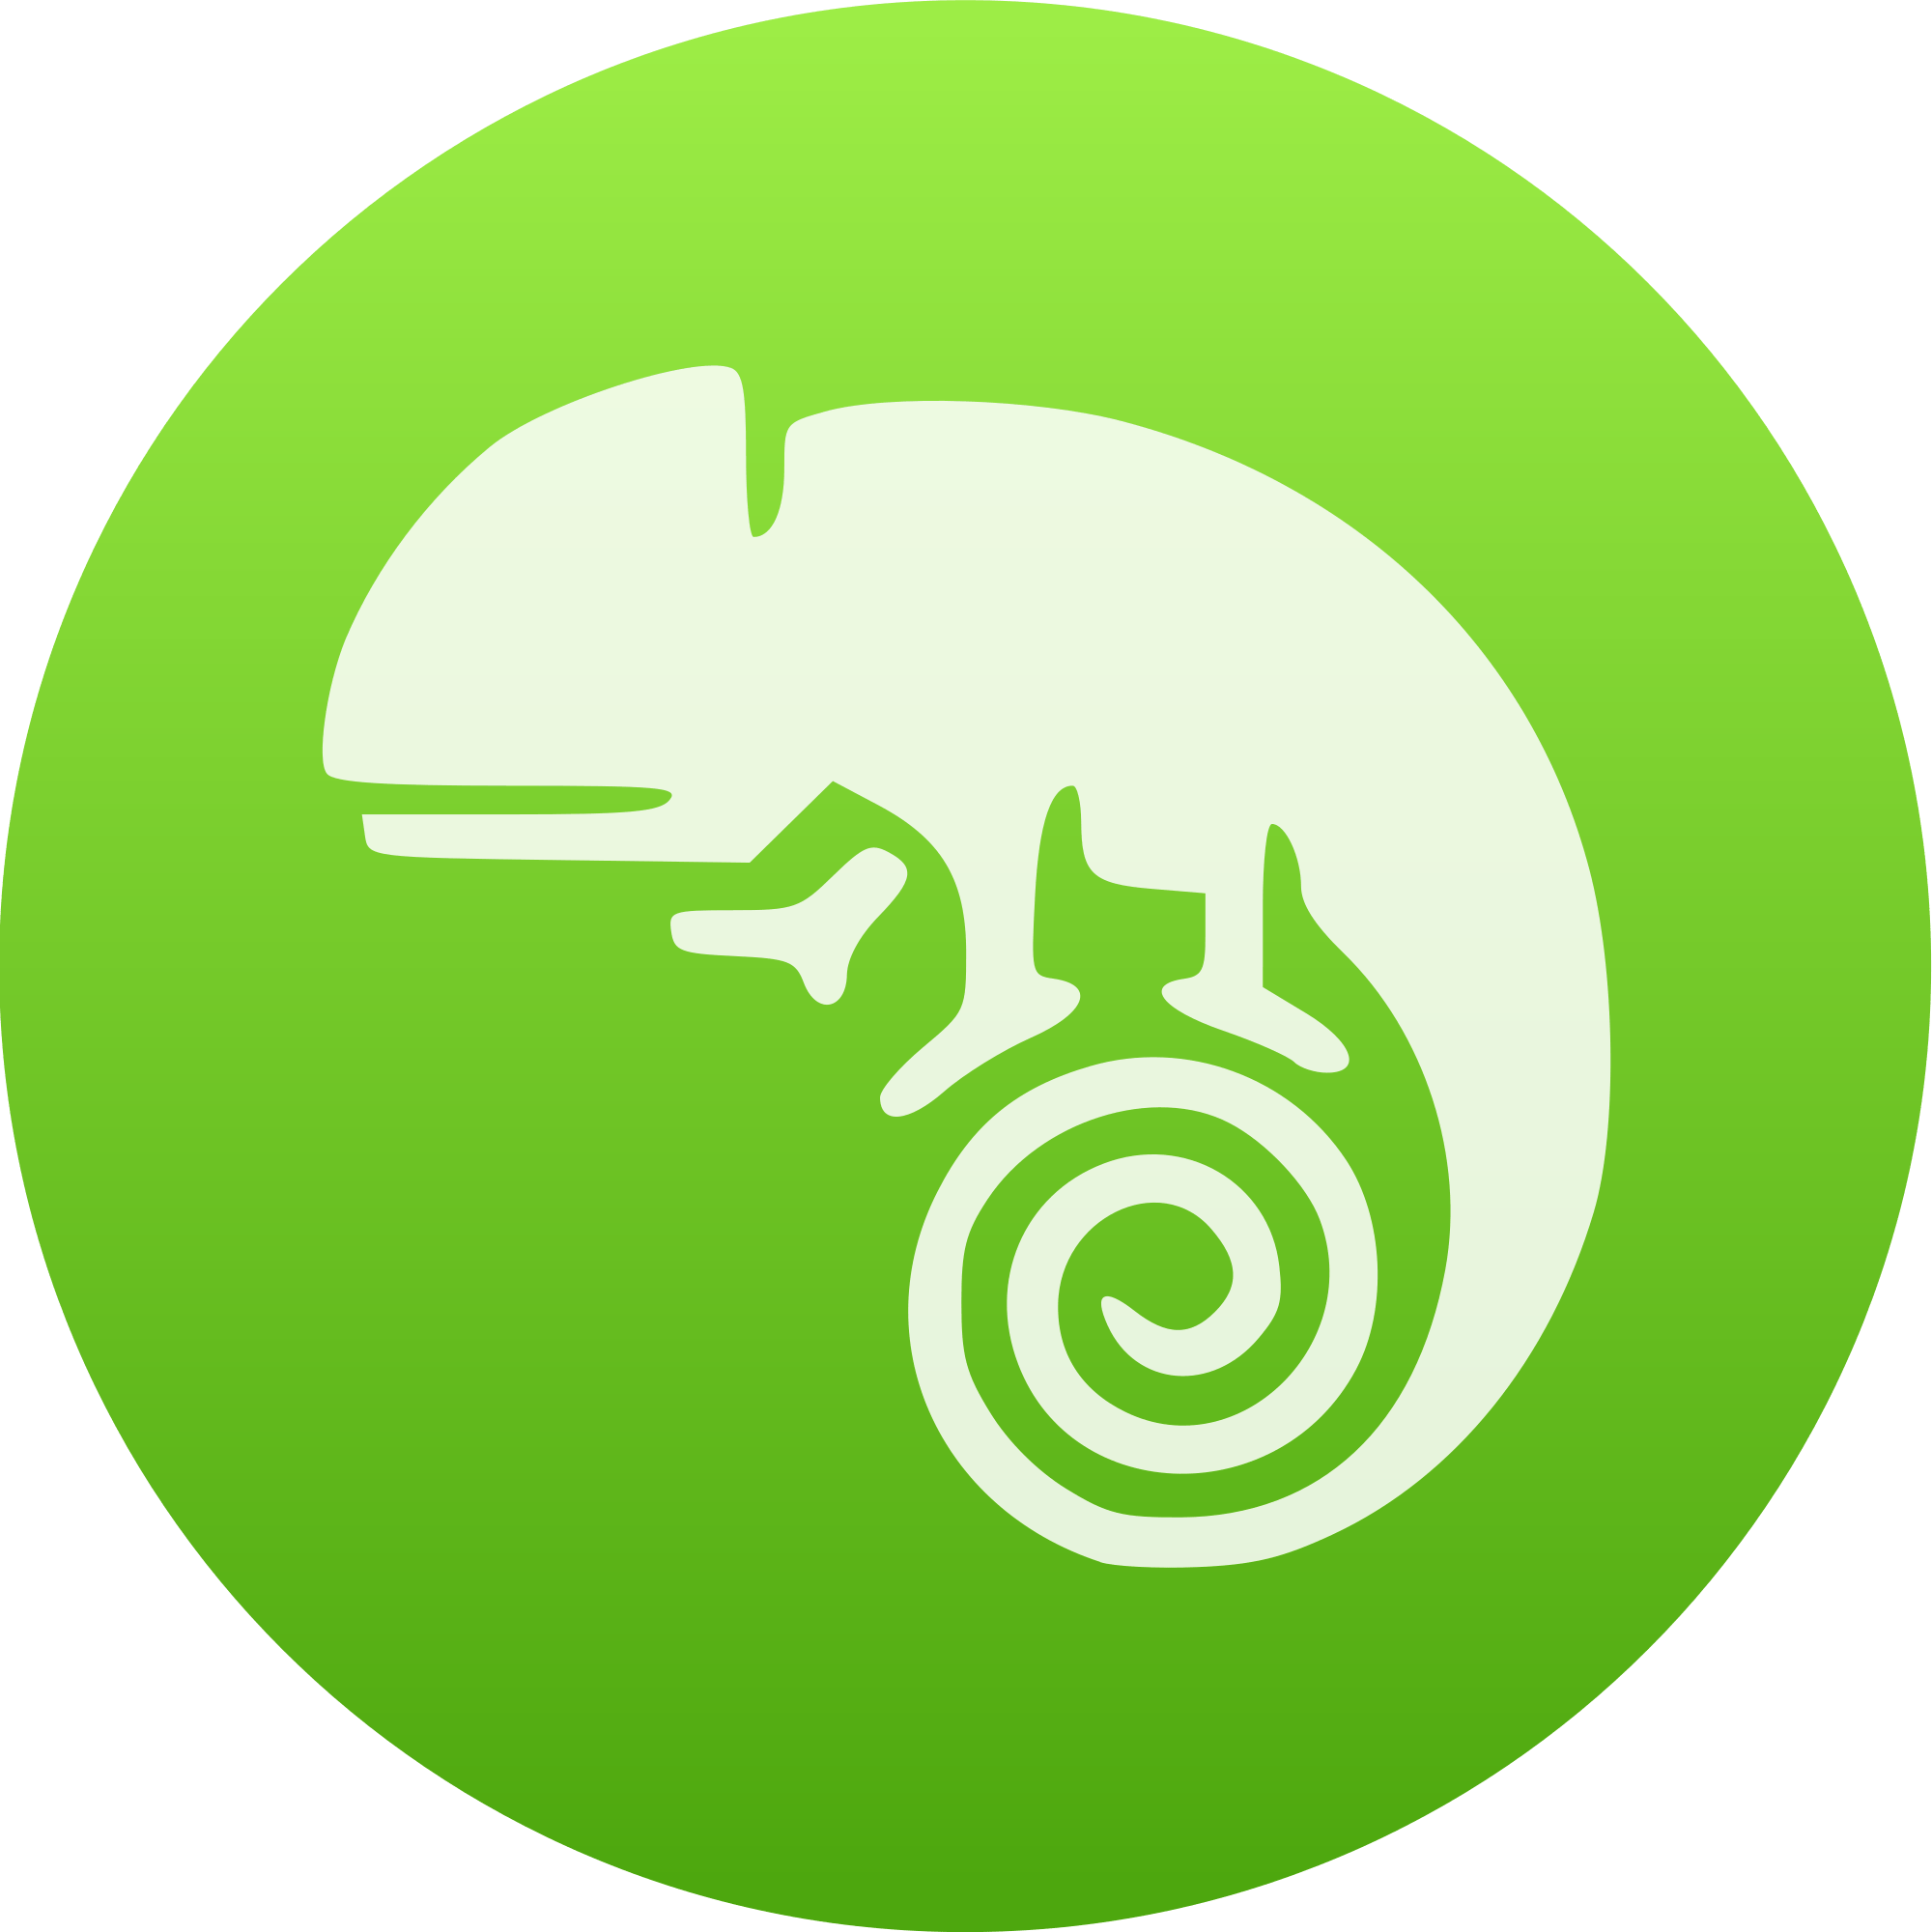 openSUSE Logo - File:Antu distributor-logo-opensuse.svg - Wikimedia Commons